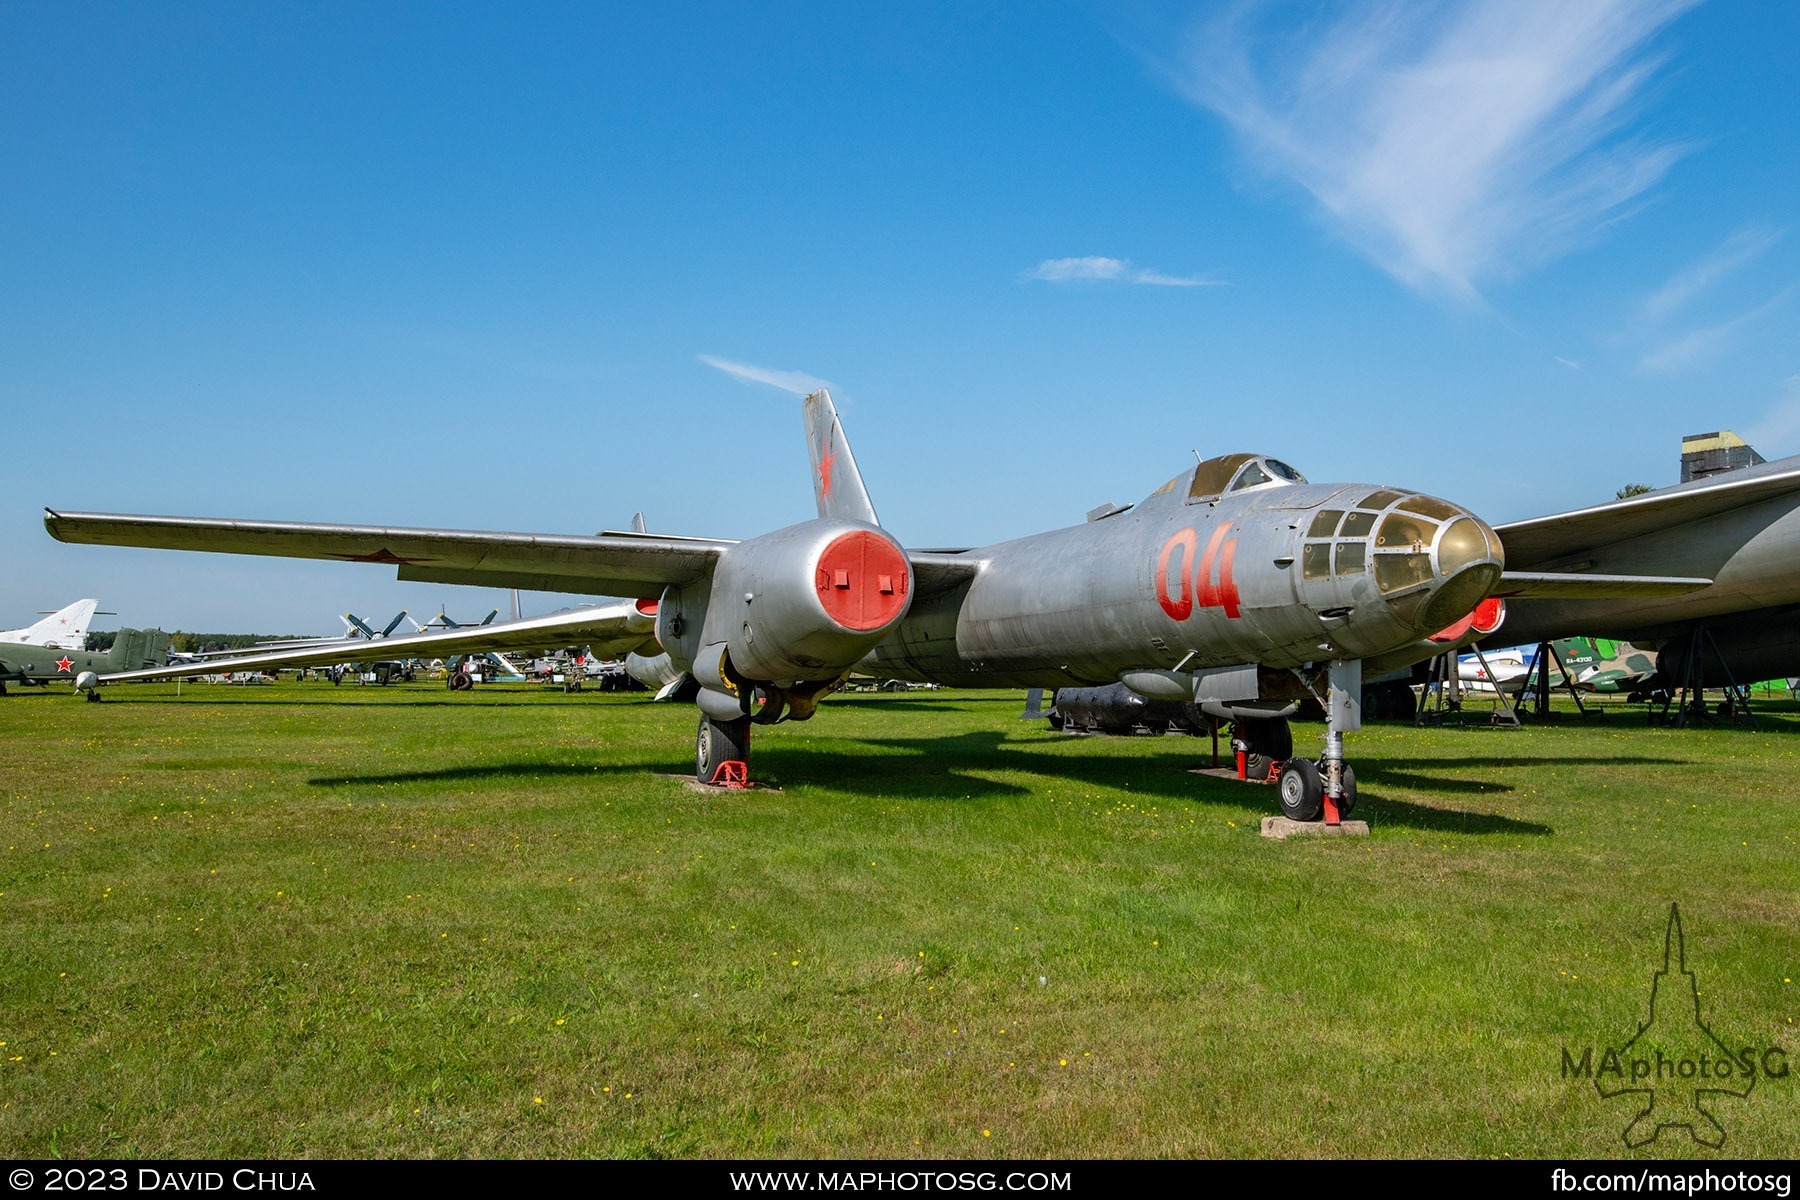 Ilyushin IL-28. First Soviet jet bomber.